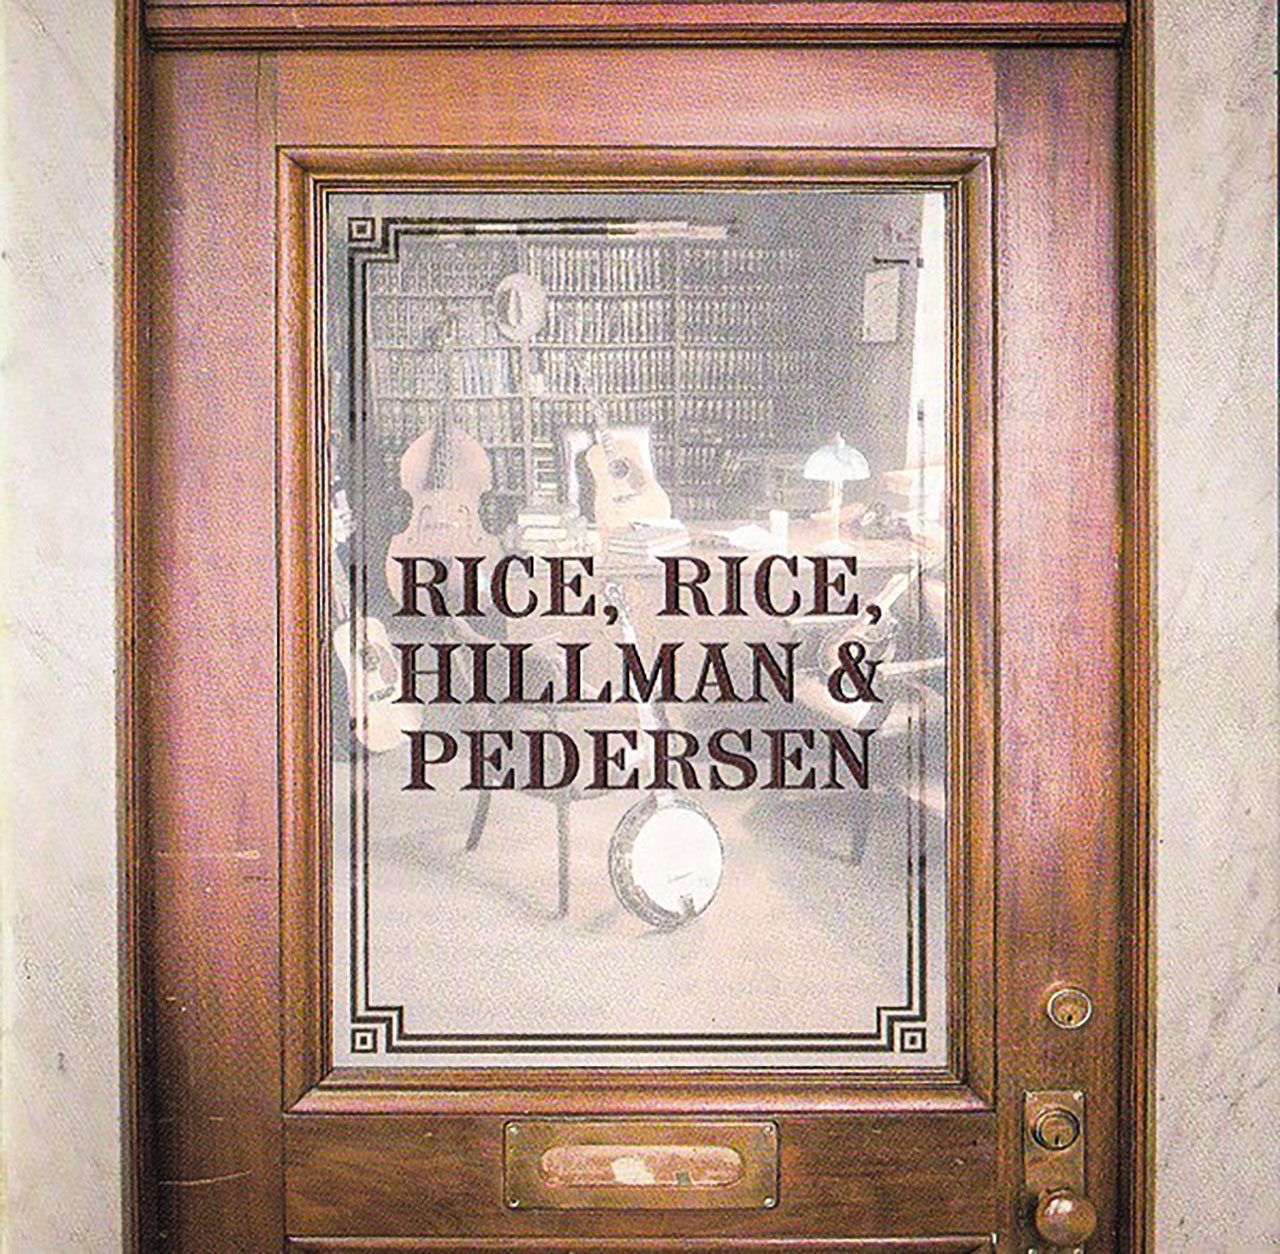 Tony Rice, Larry Rice, Chris Hillman & Herb Pedersen – “Rice, Rice, Hillman & Pedersen” cover album